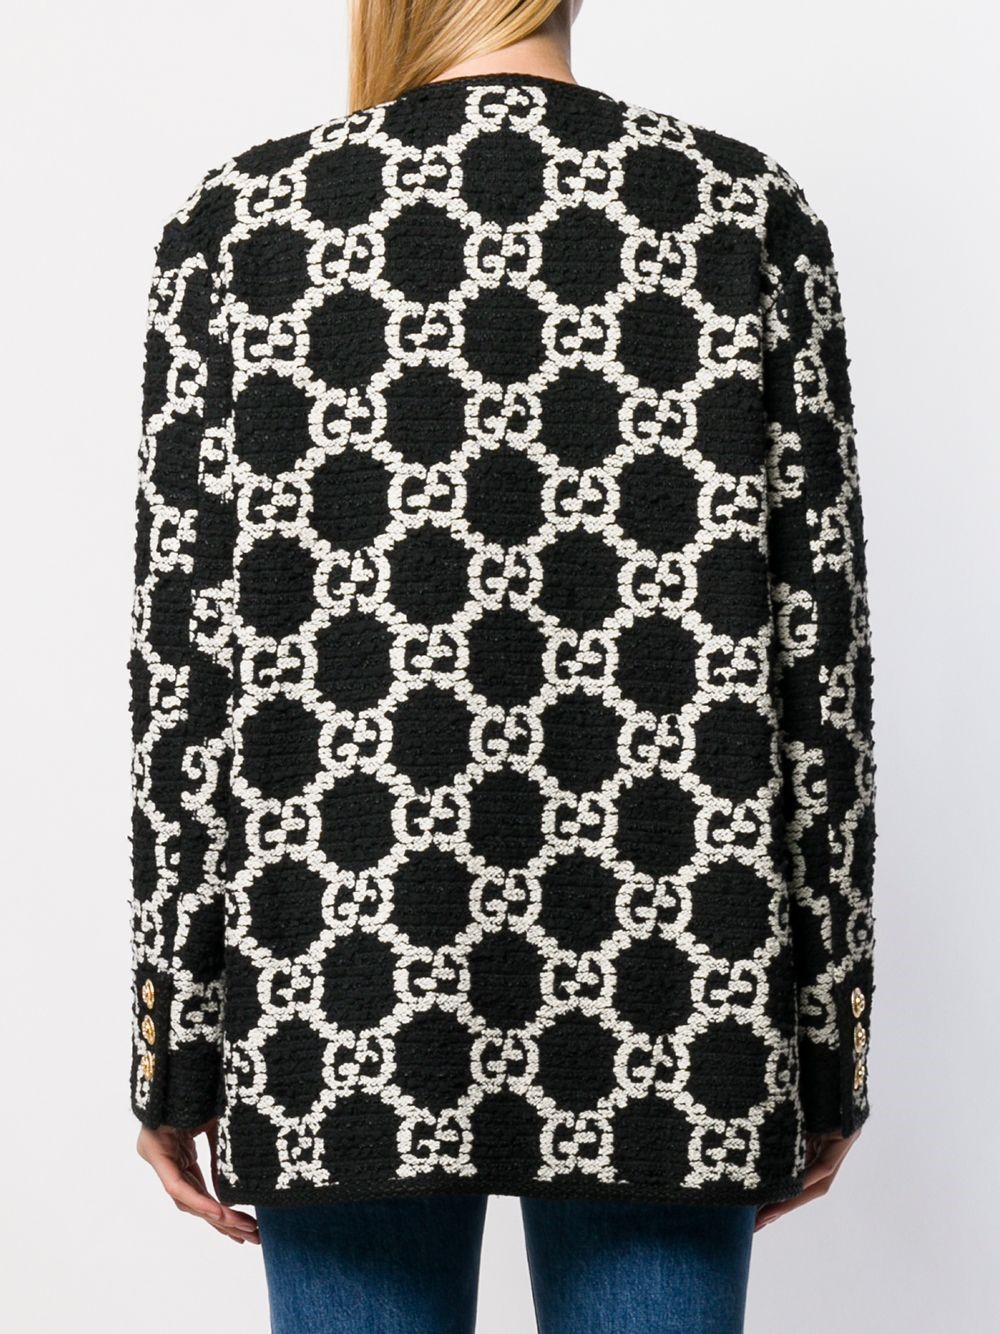 gucci black and white sweater